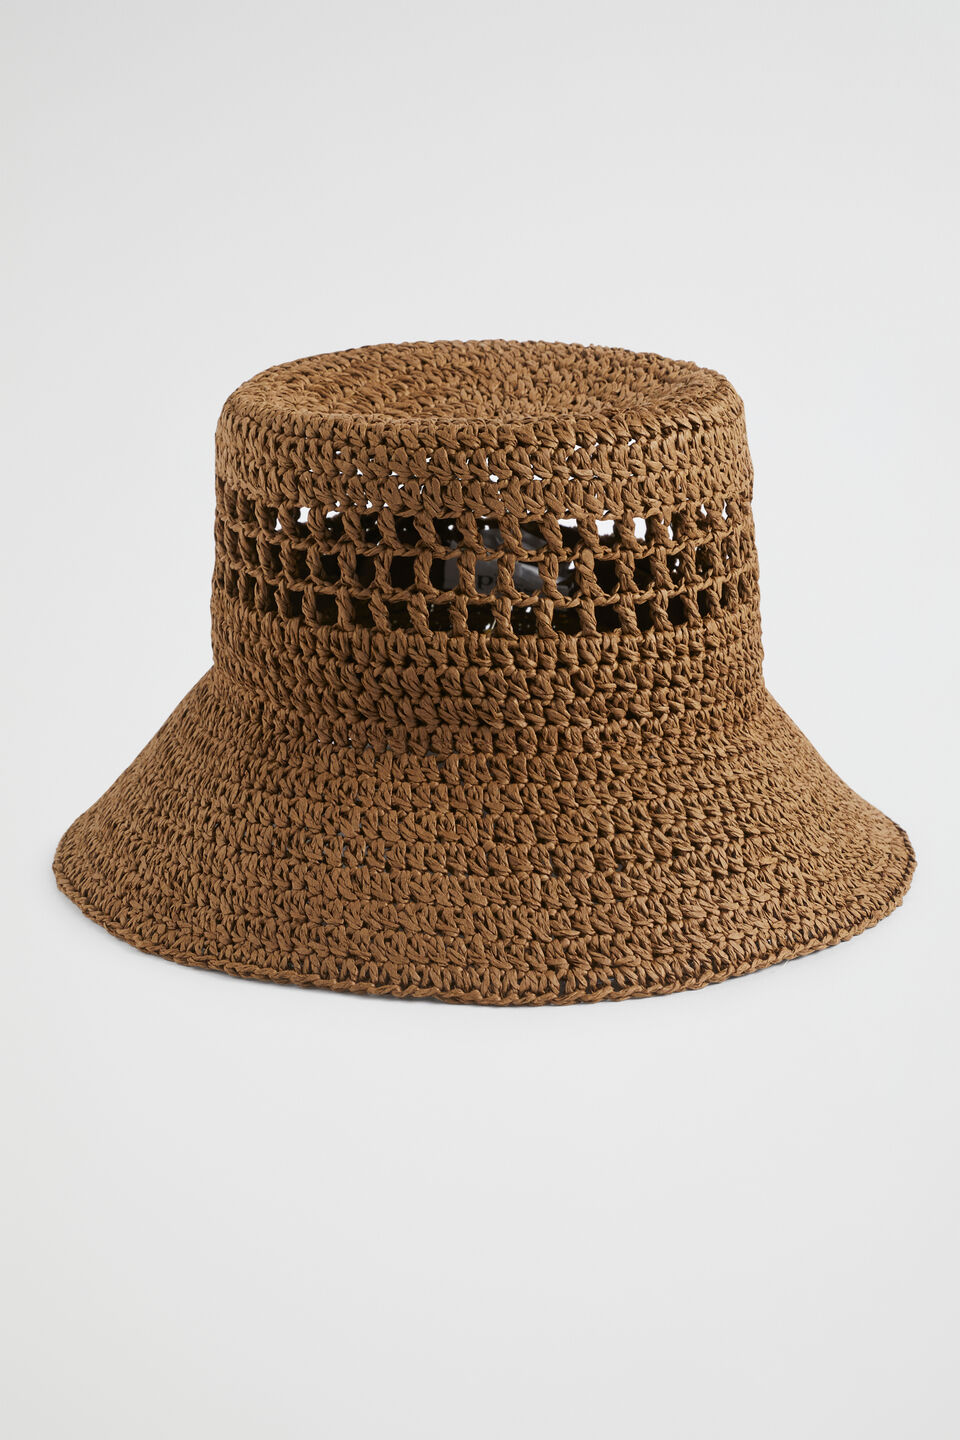 Cutout Straw Bucket Hat  Pecan Brown